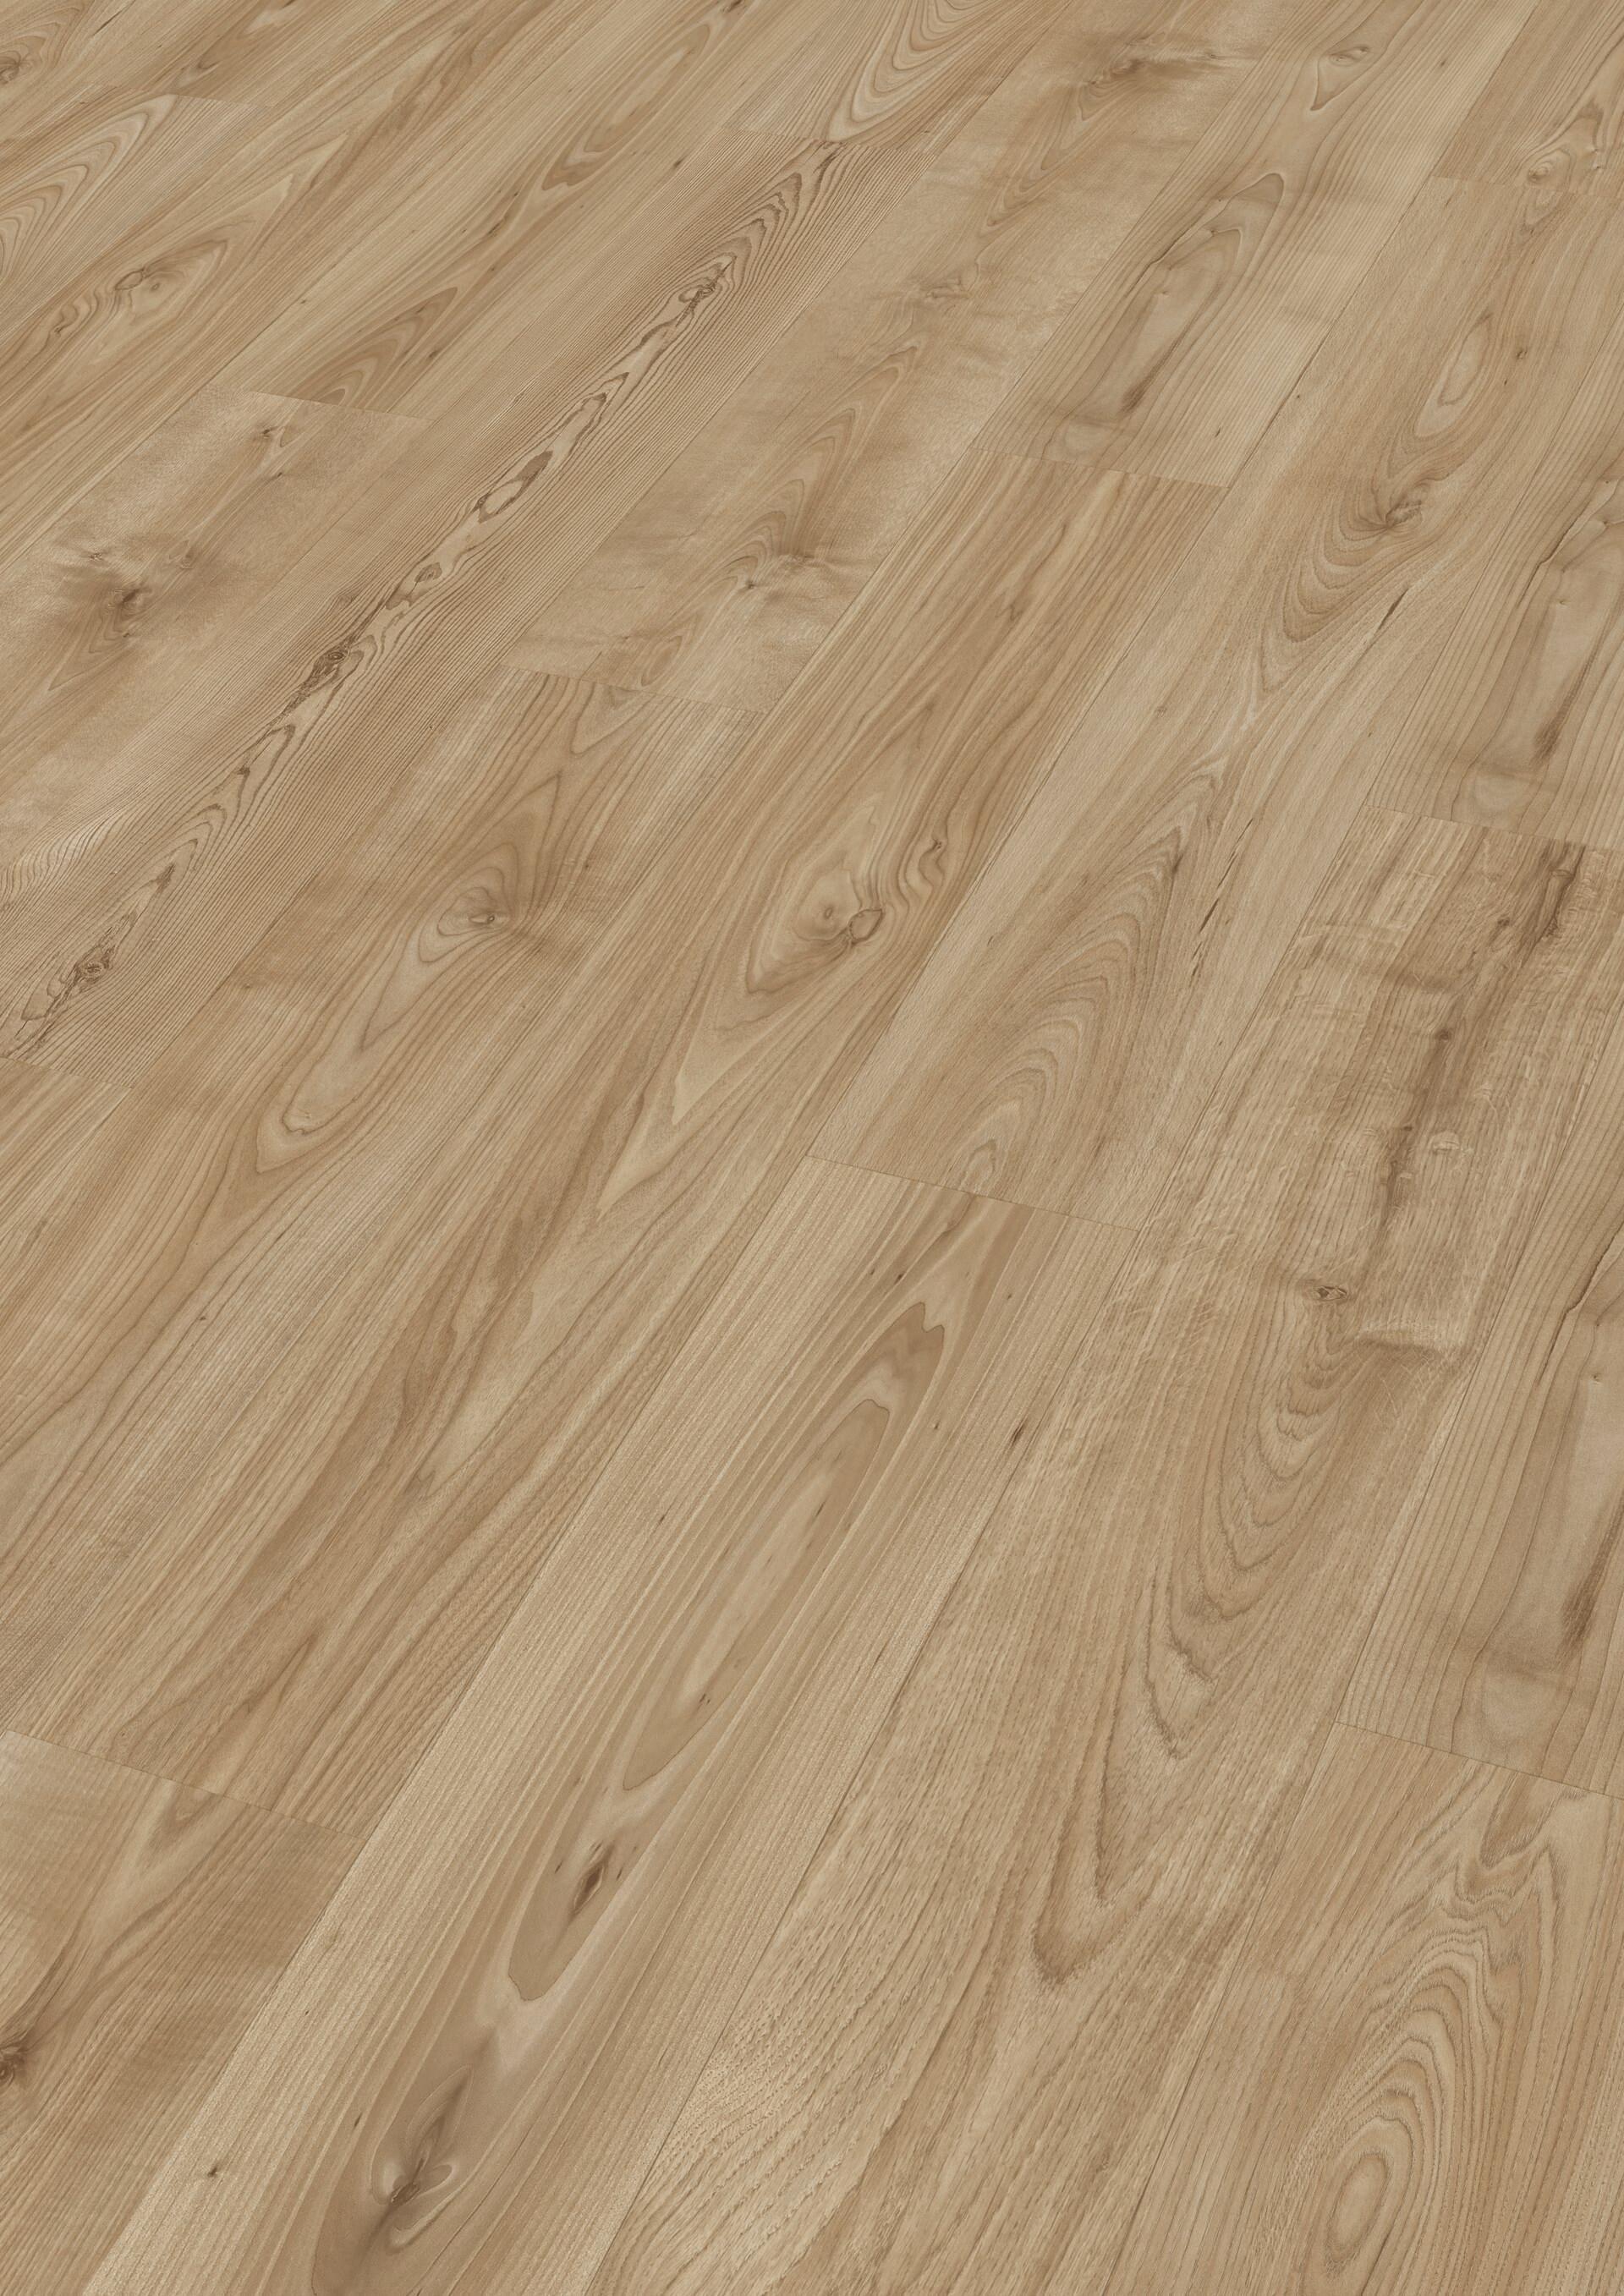 Laminate Flooring Multiwood 6849 Meister, Master Design Laminate Flooring Reviews